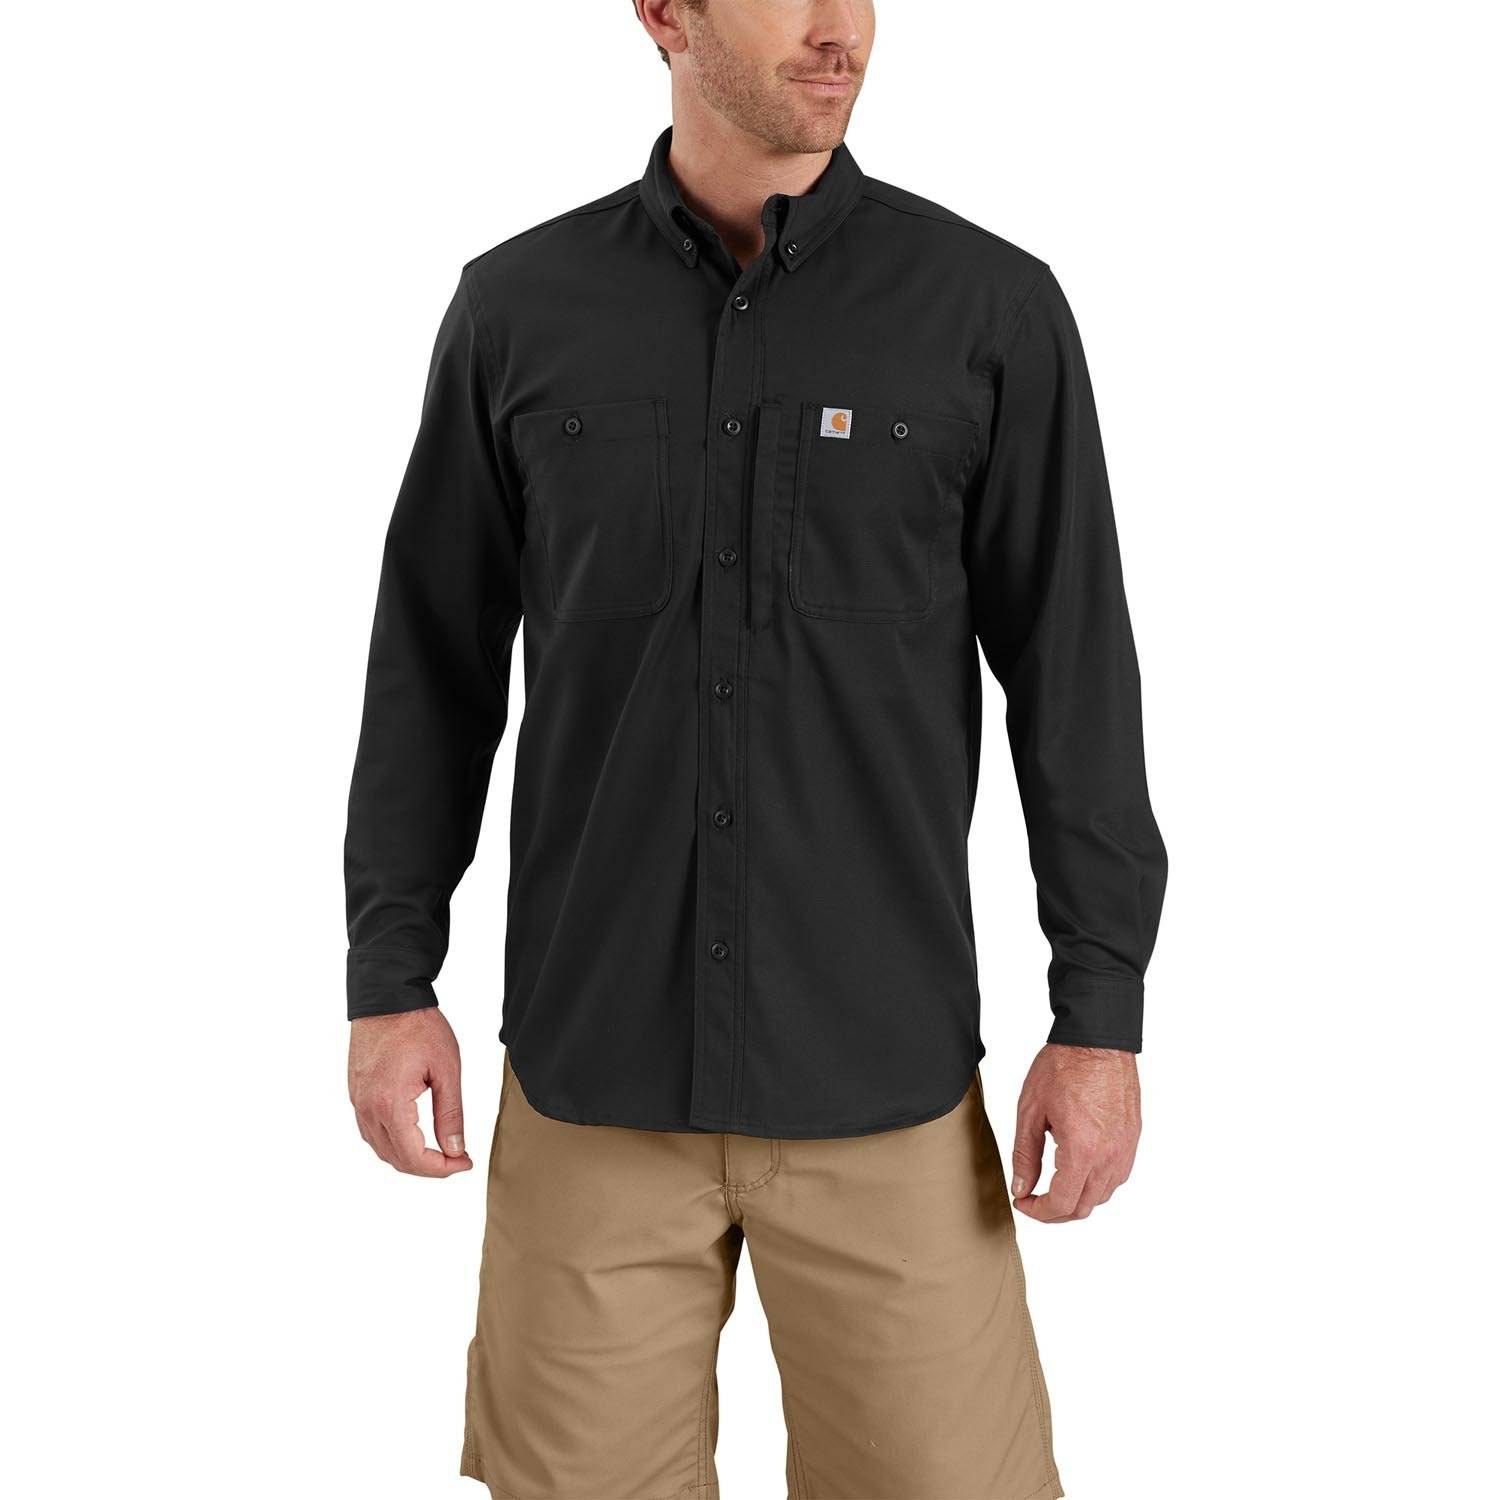 Carhartt Rugged Professional Series Long Sleeve Shirt |Galls